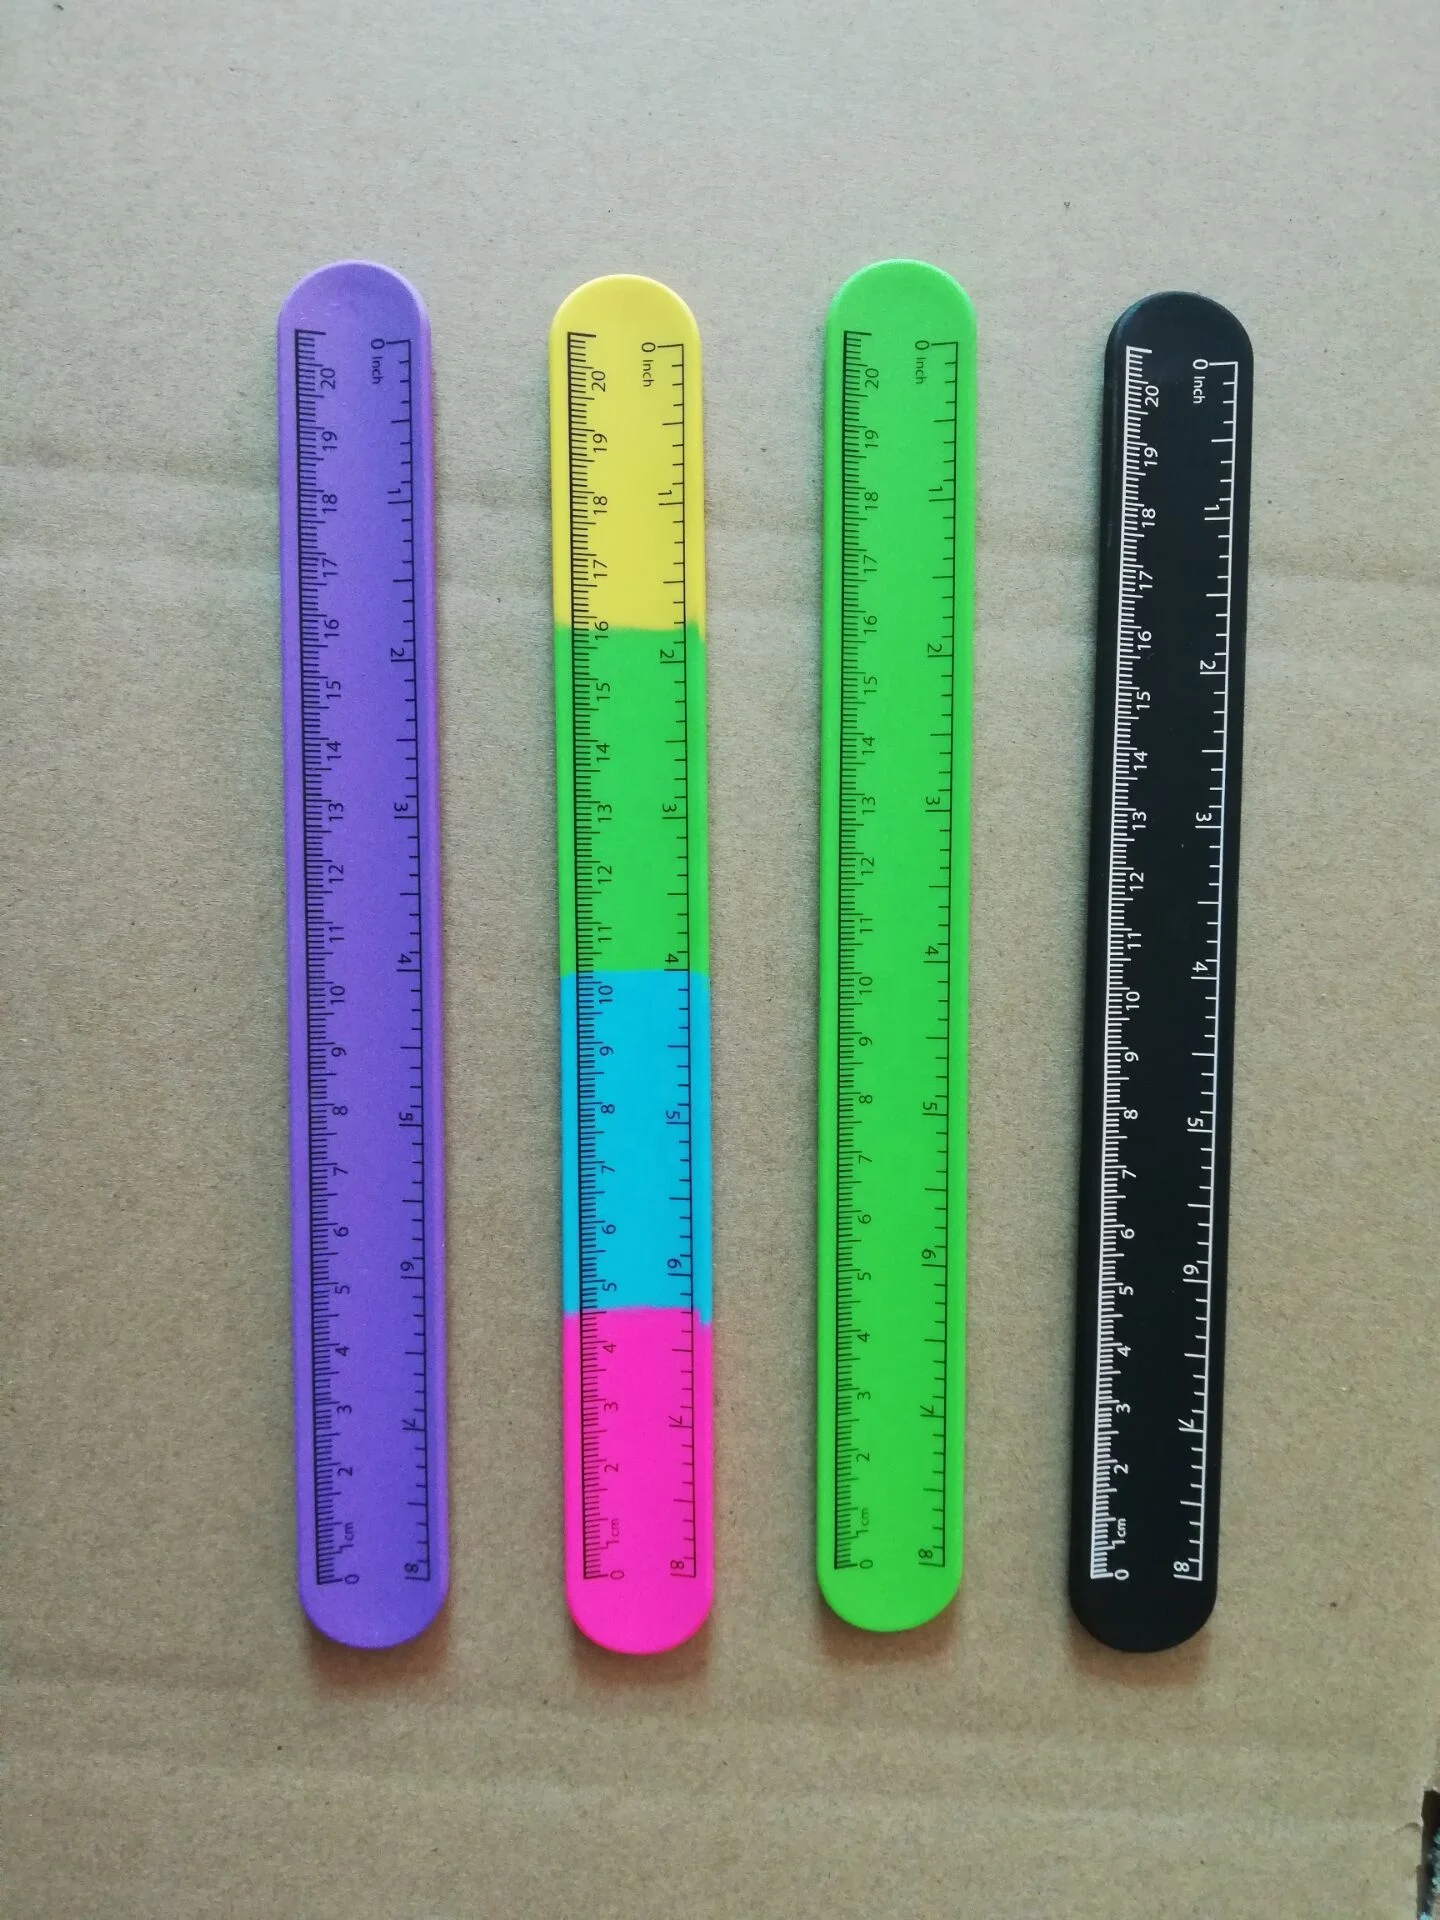 Functional Snap Bracelet Ruler Measure Slap Wristbands